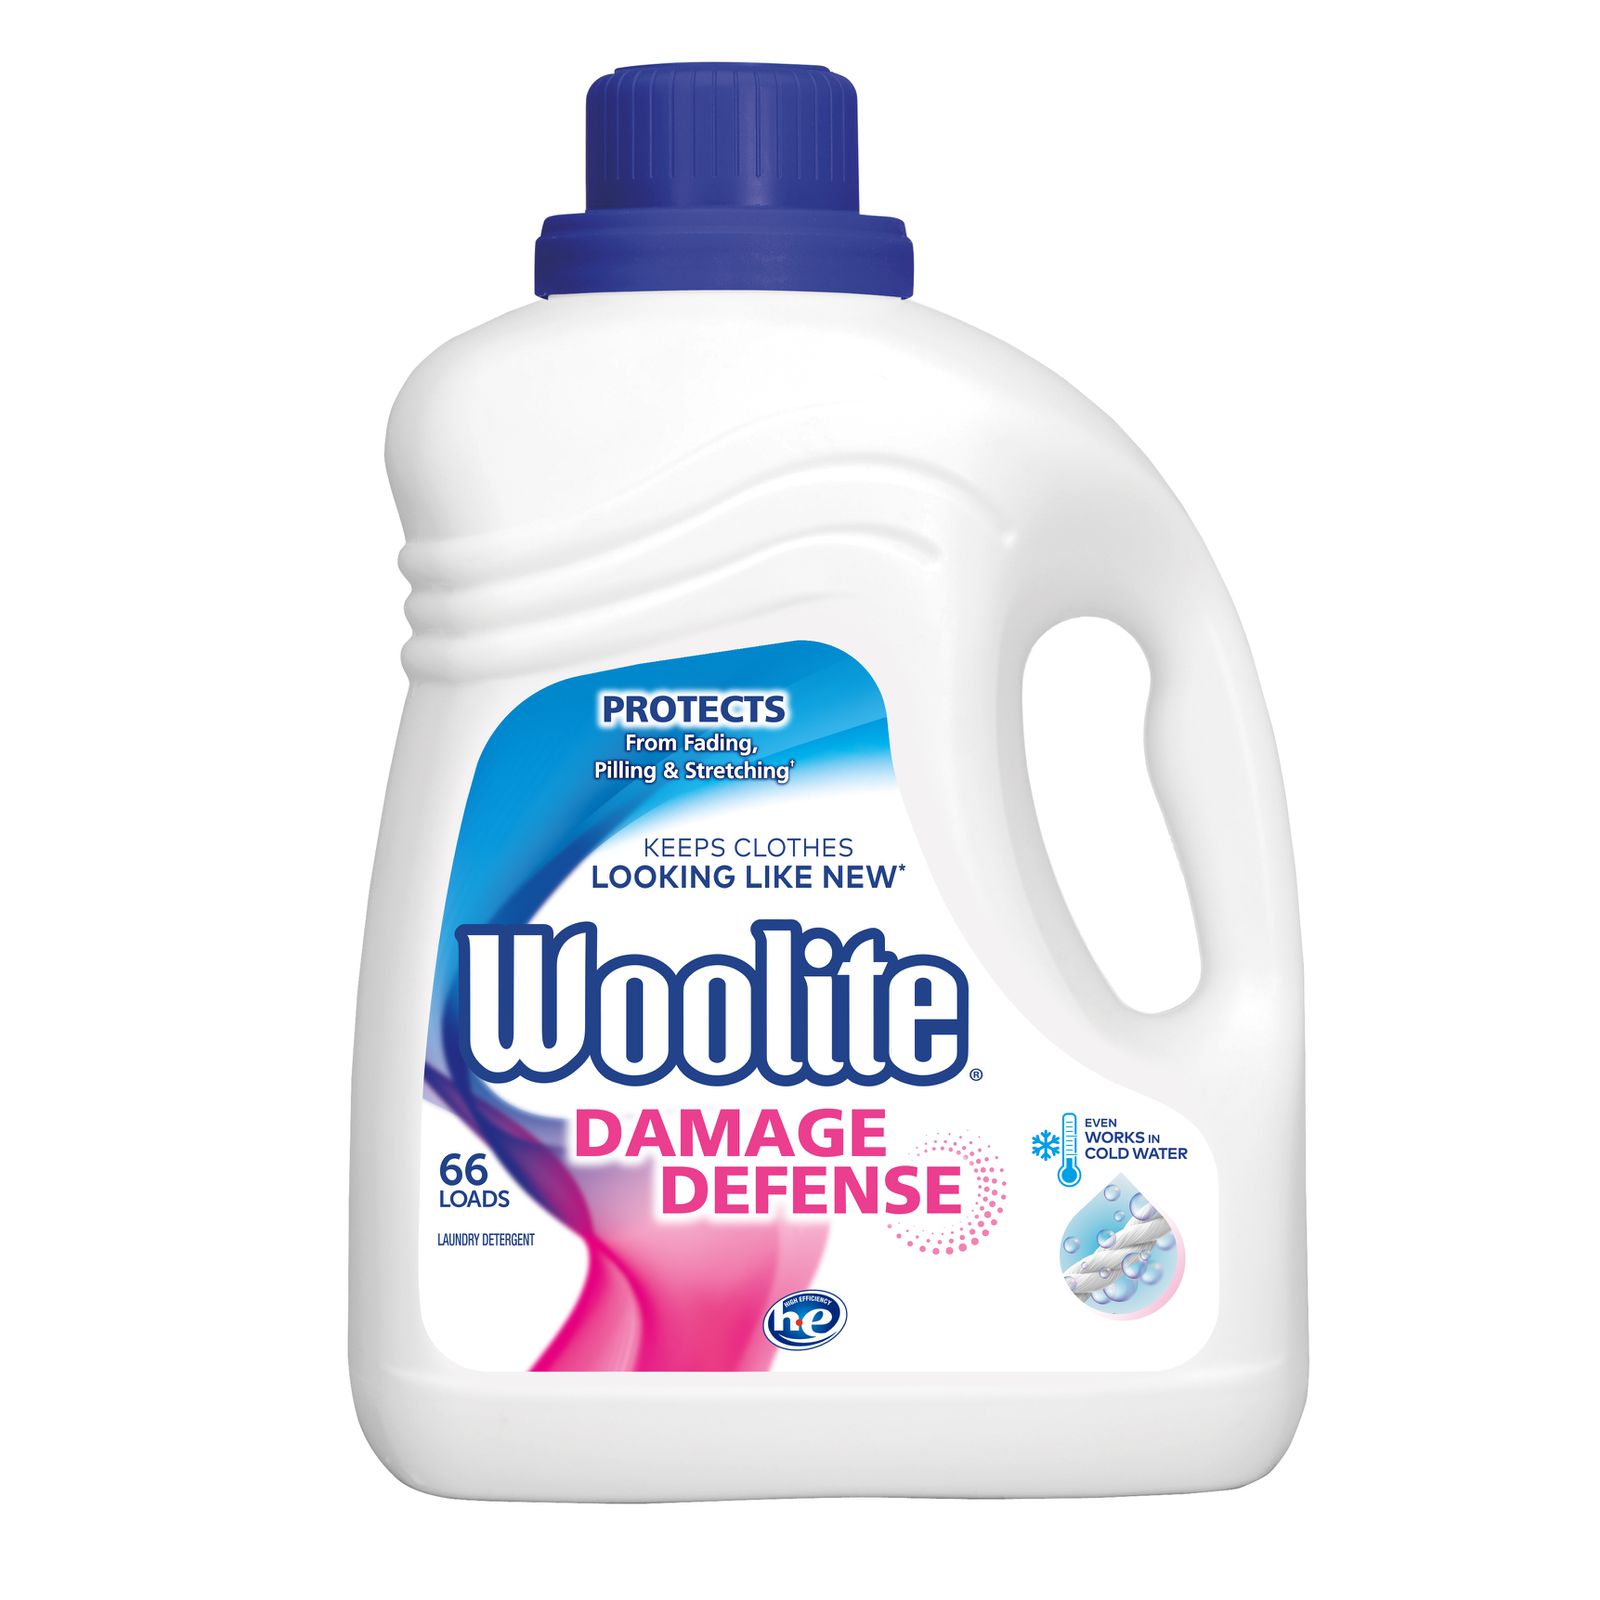 Woolite  How to Use Woolite®